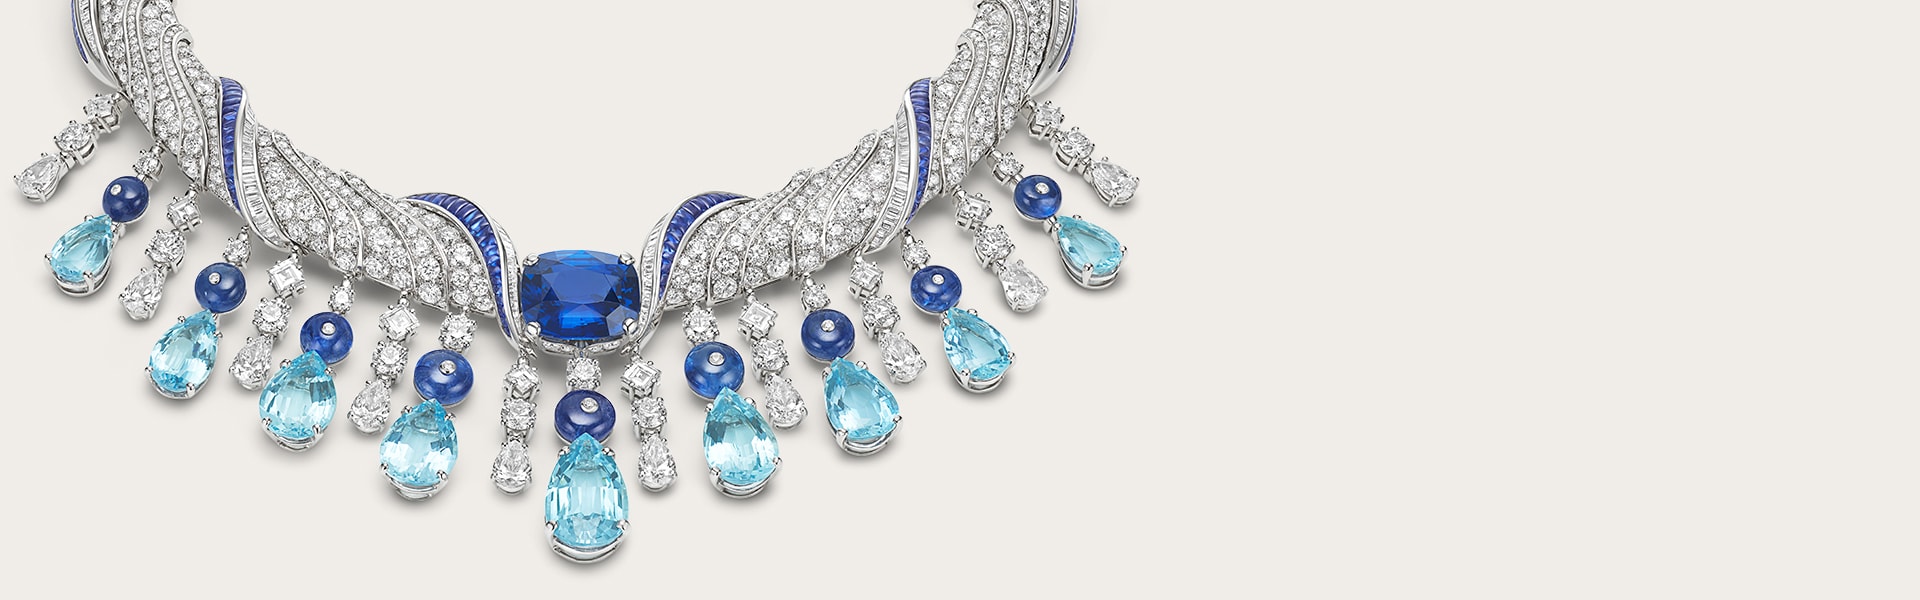 Mediterranean Muse Mediterranea High Jewelry platinum necklace with sapphires, aquamarines and diamonds, close-up.